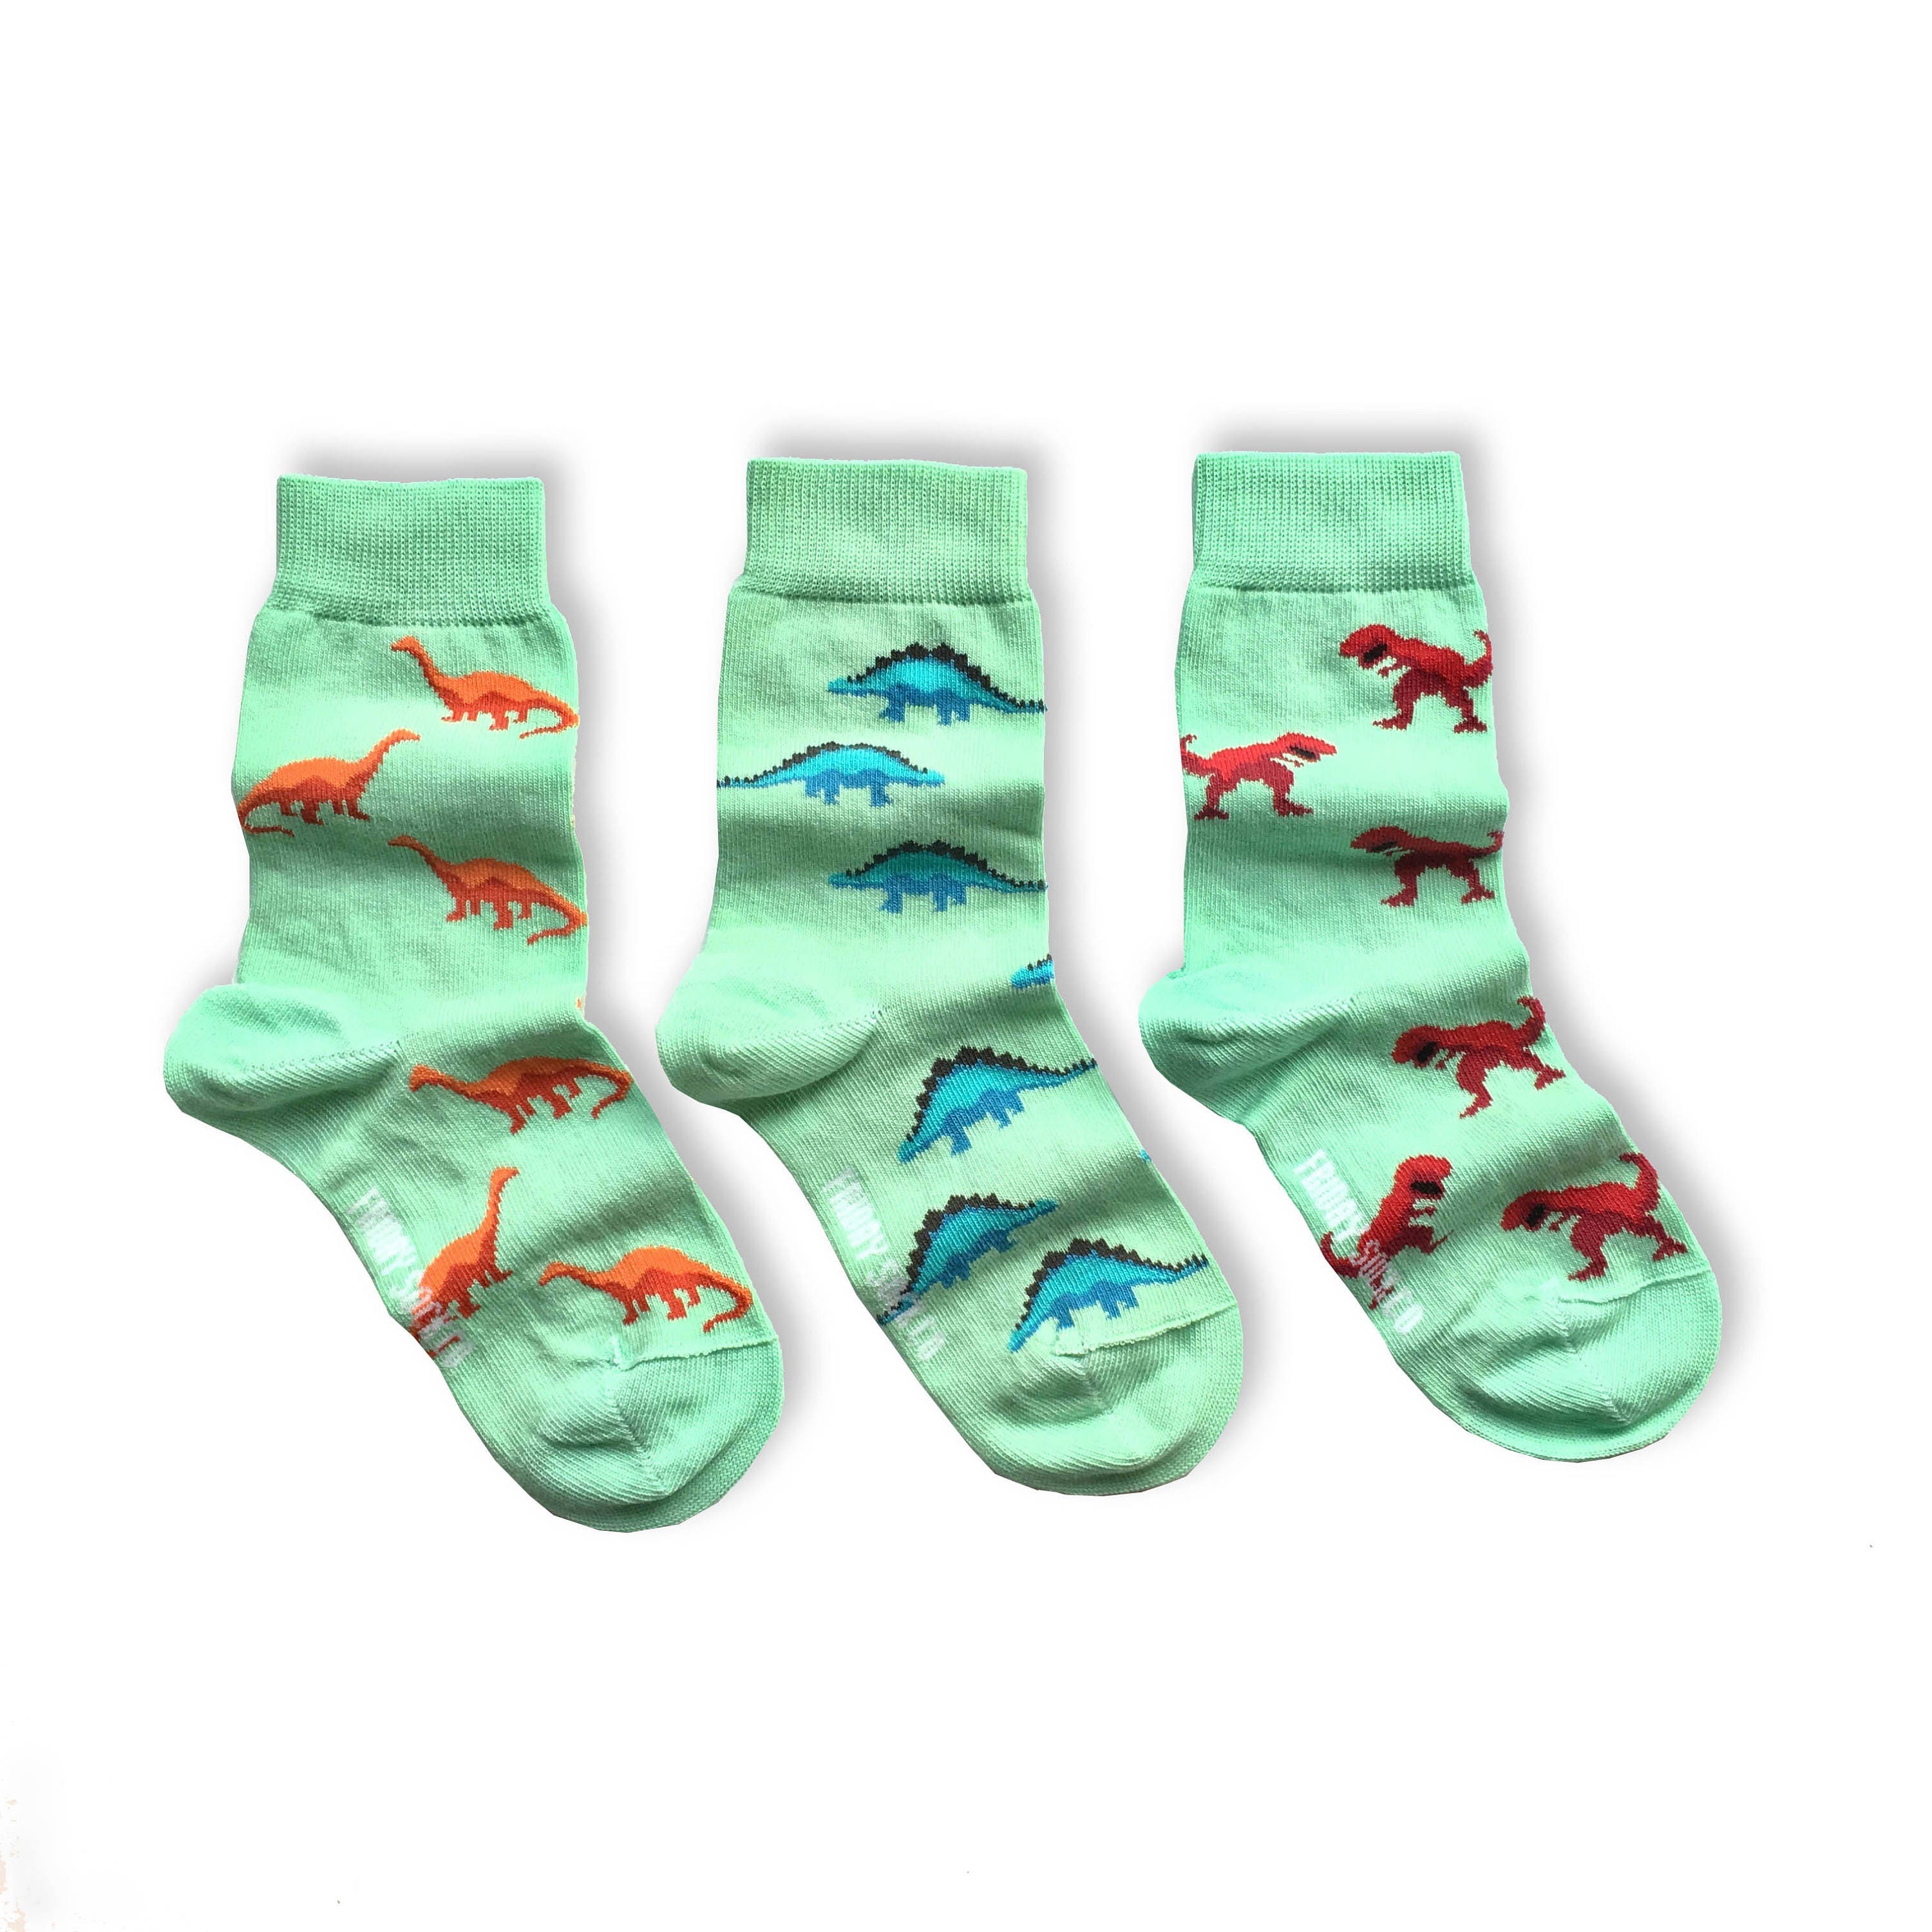 KIDS Socks Mismatched Socks Dinosaurs Fun Socks Crazy